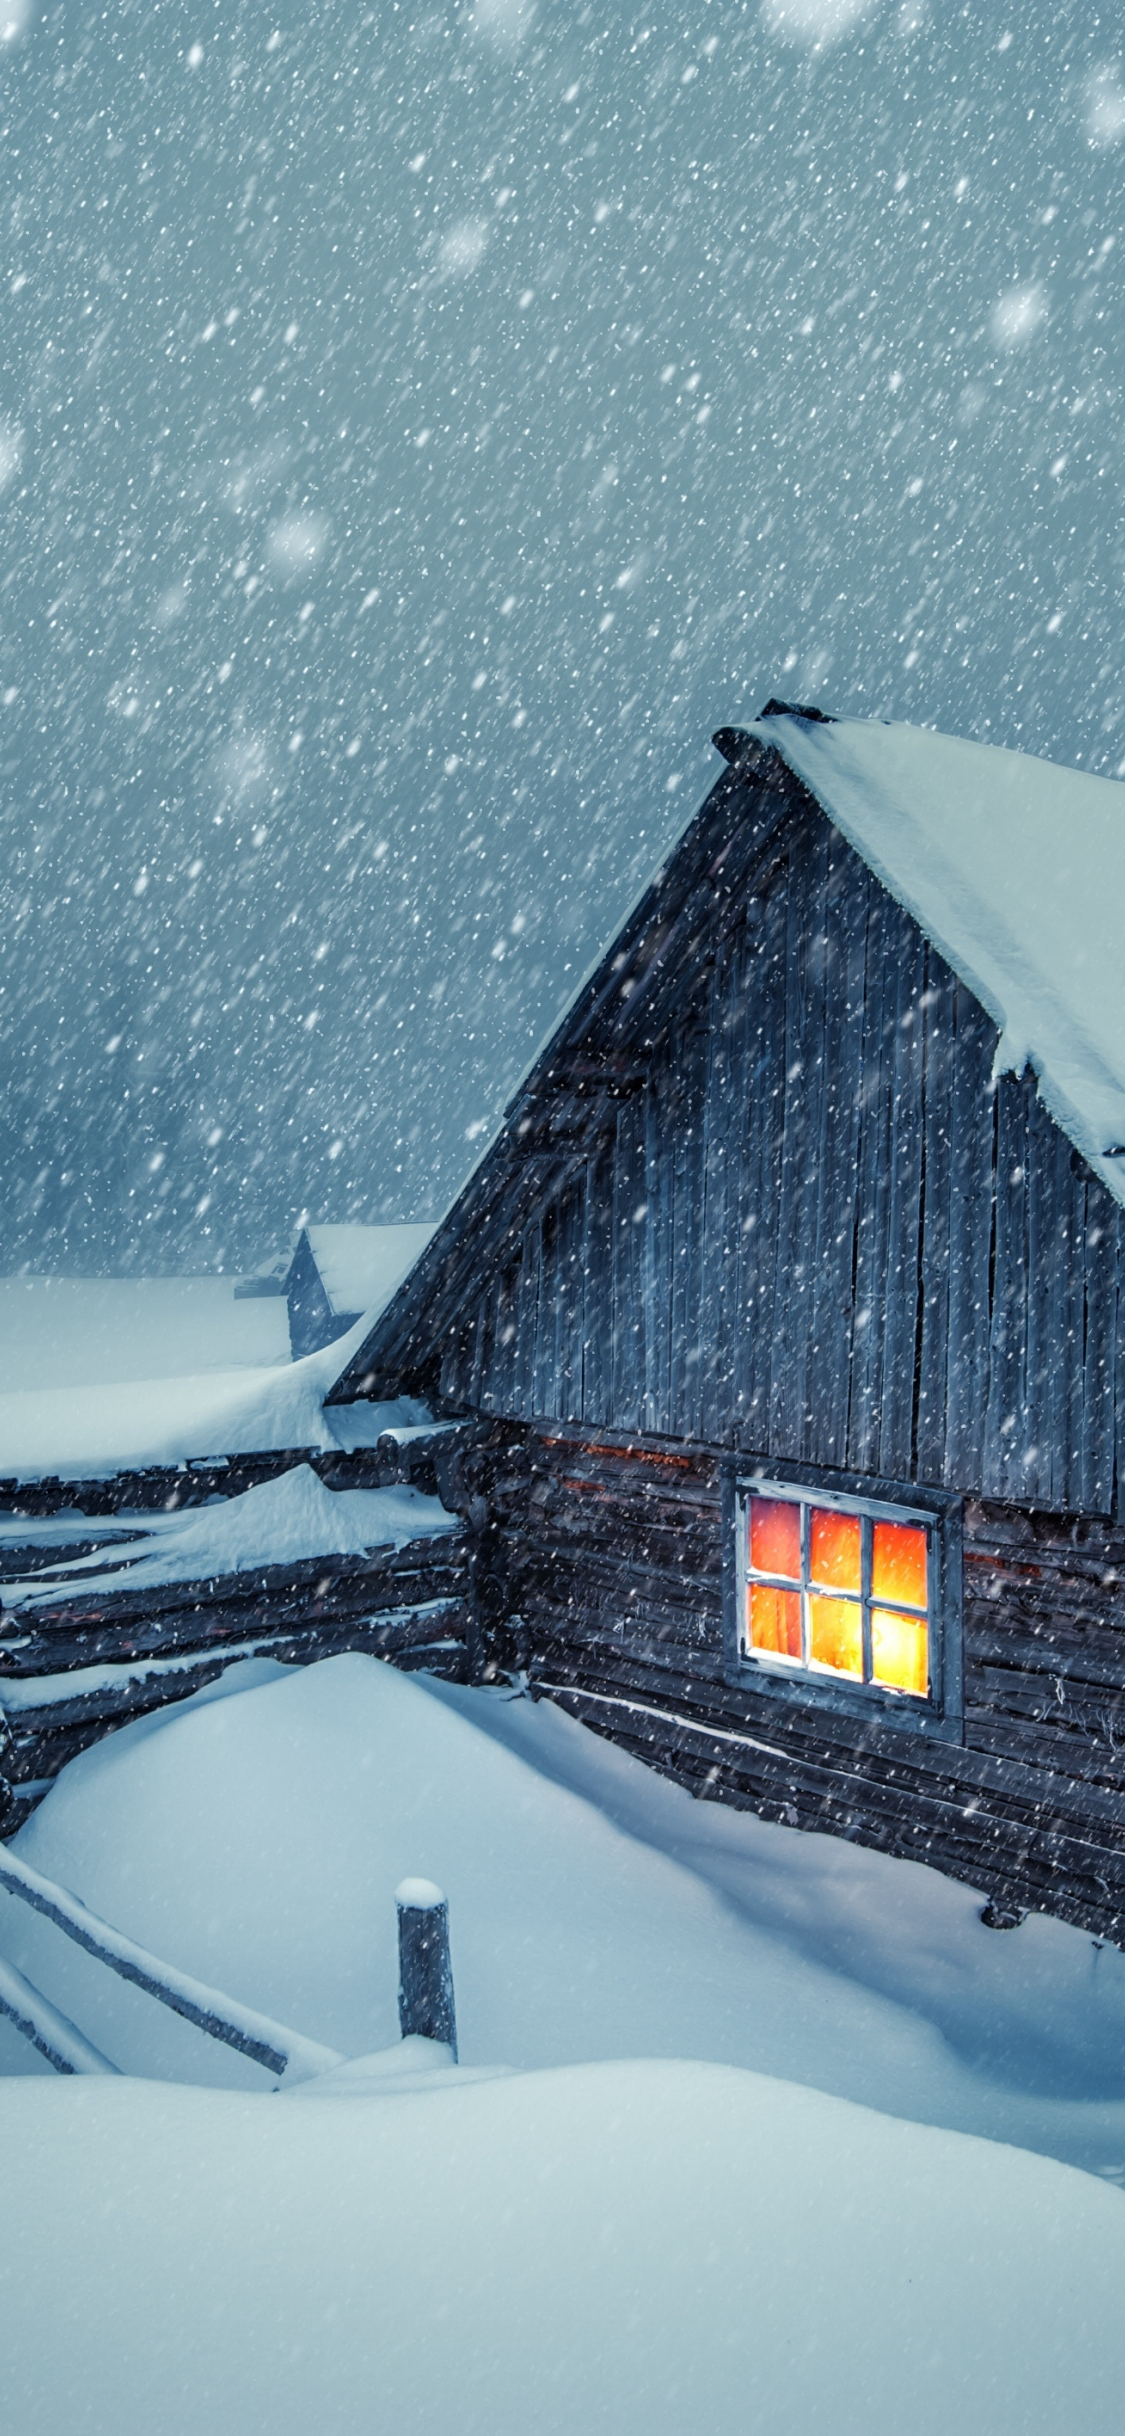 Download wallpaper 1125x2436 house light, winter, snowfall, iphone x,  1125x2436 hd background, 22984